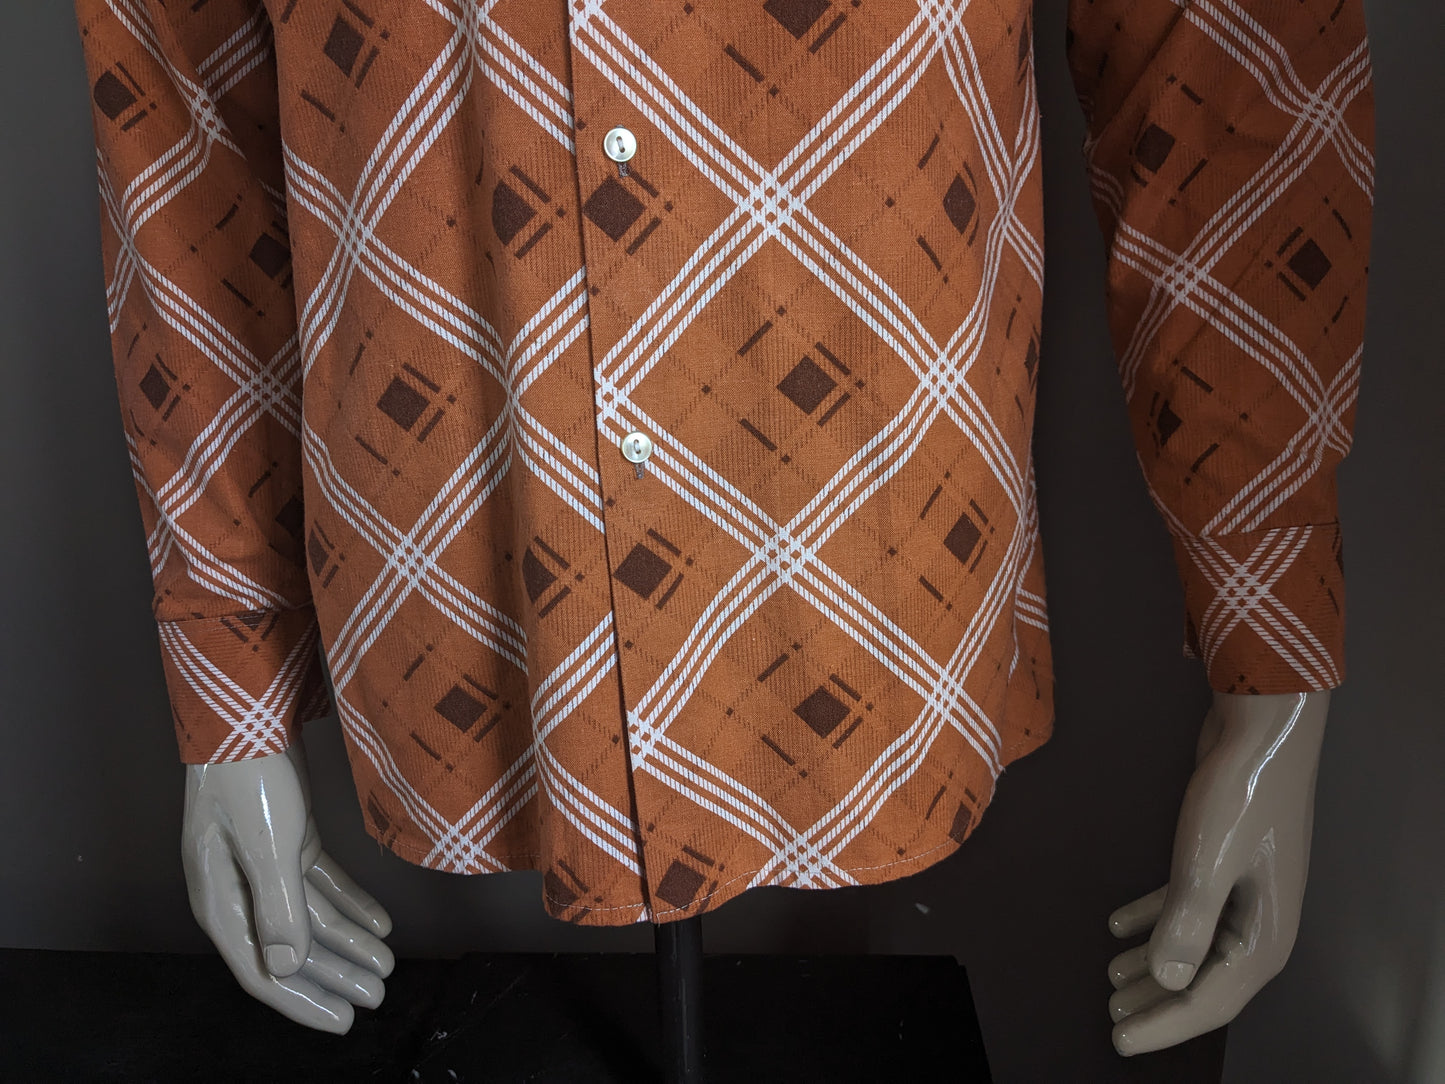 Vintage Sohaj 70's shirt. Orange white brown print. Size L.